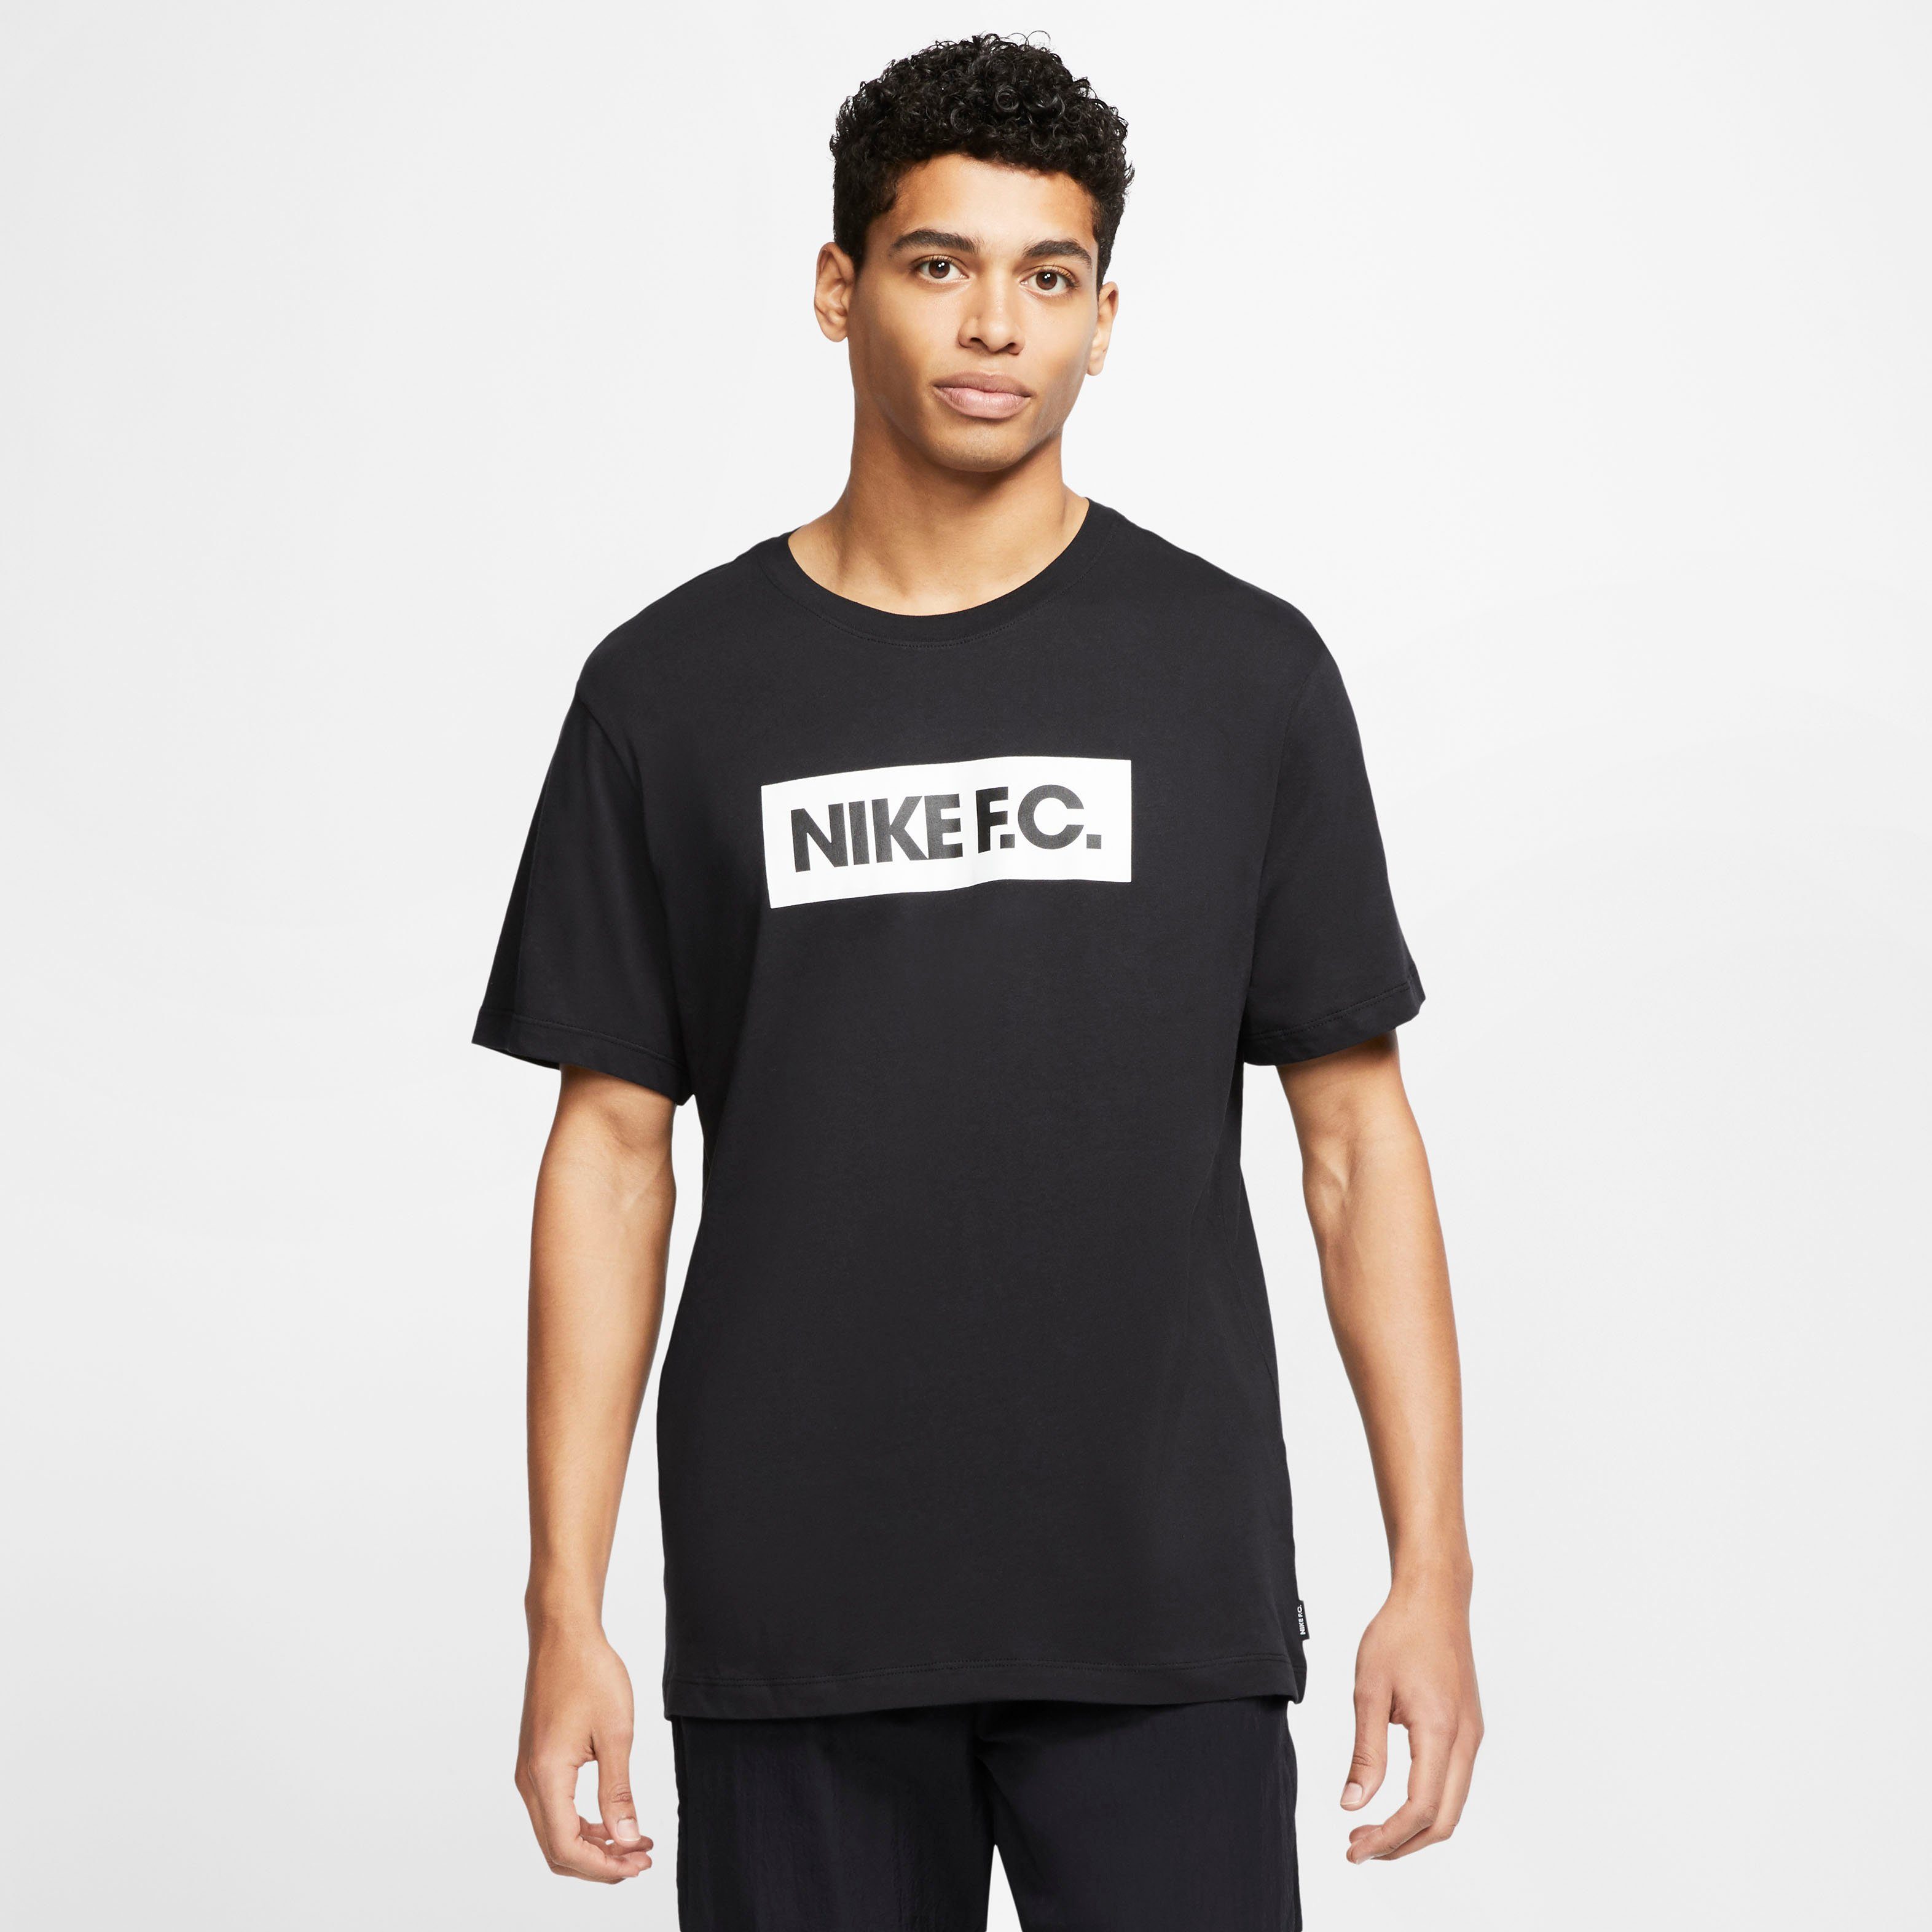 Nike T-Shirt »Nike F.c. Men's T-shirt« online kaufen | OTTO